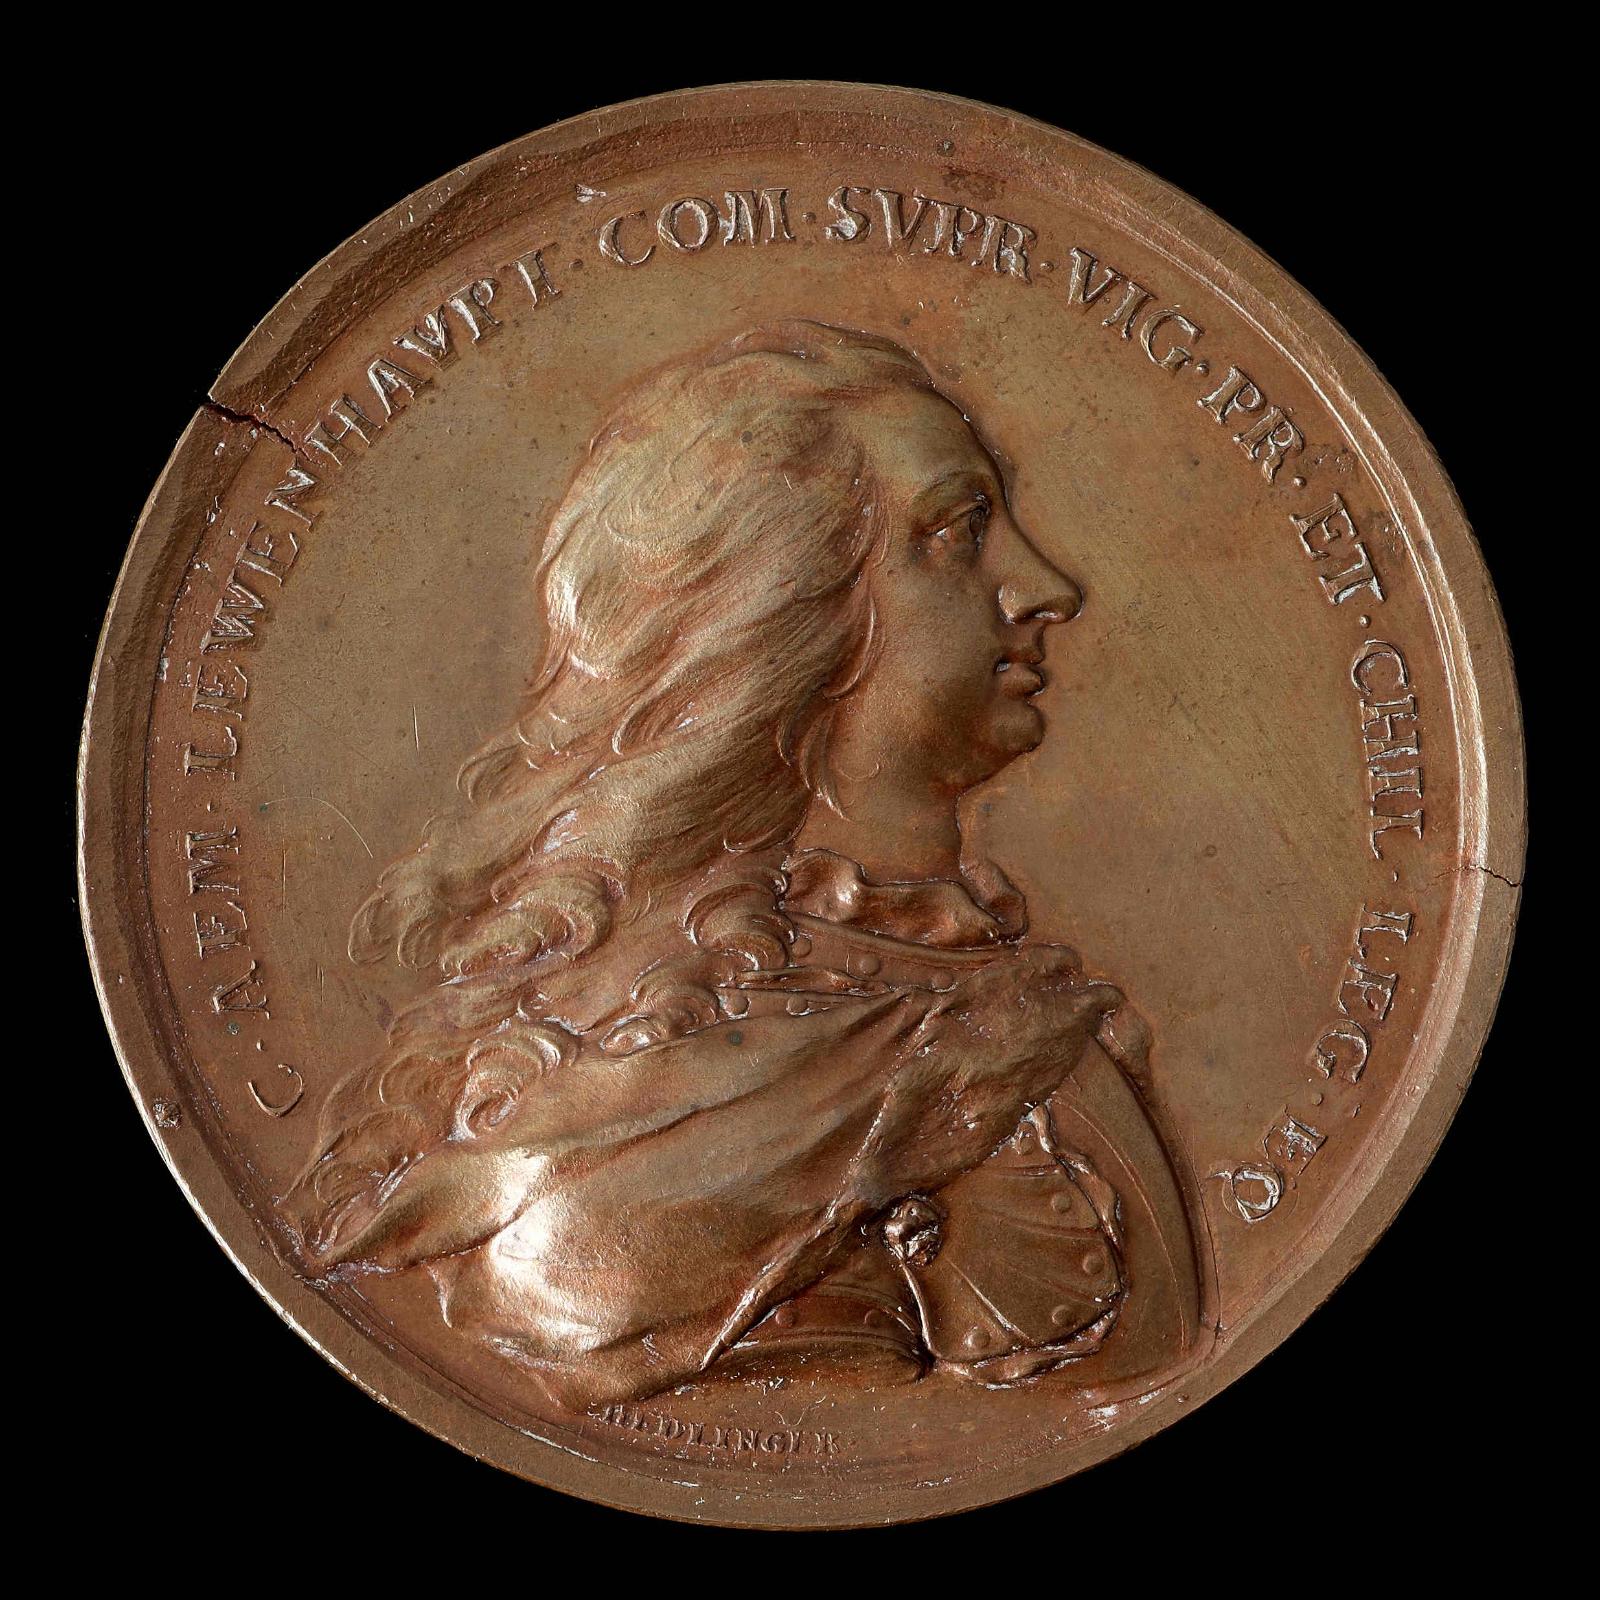 Карл Эмиль Левенгаупт на медали 1734 года.